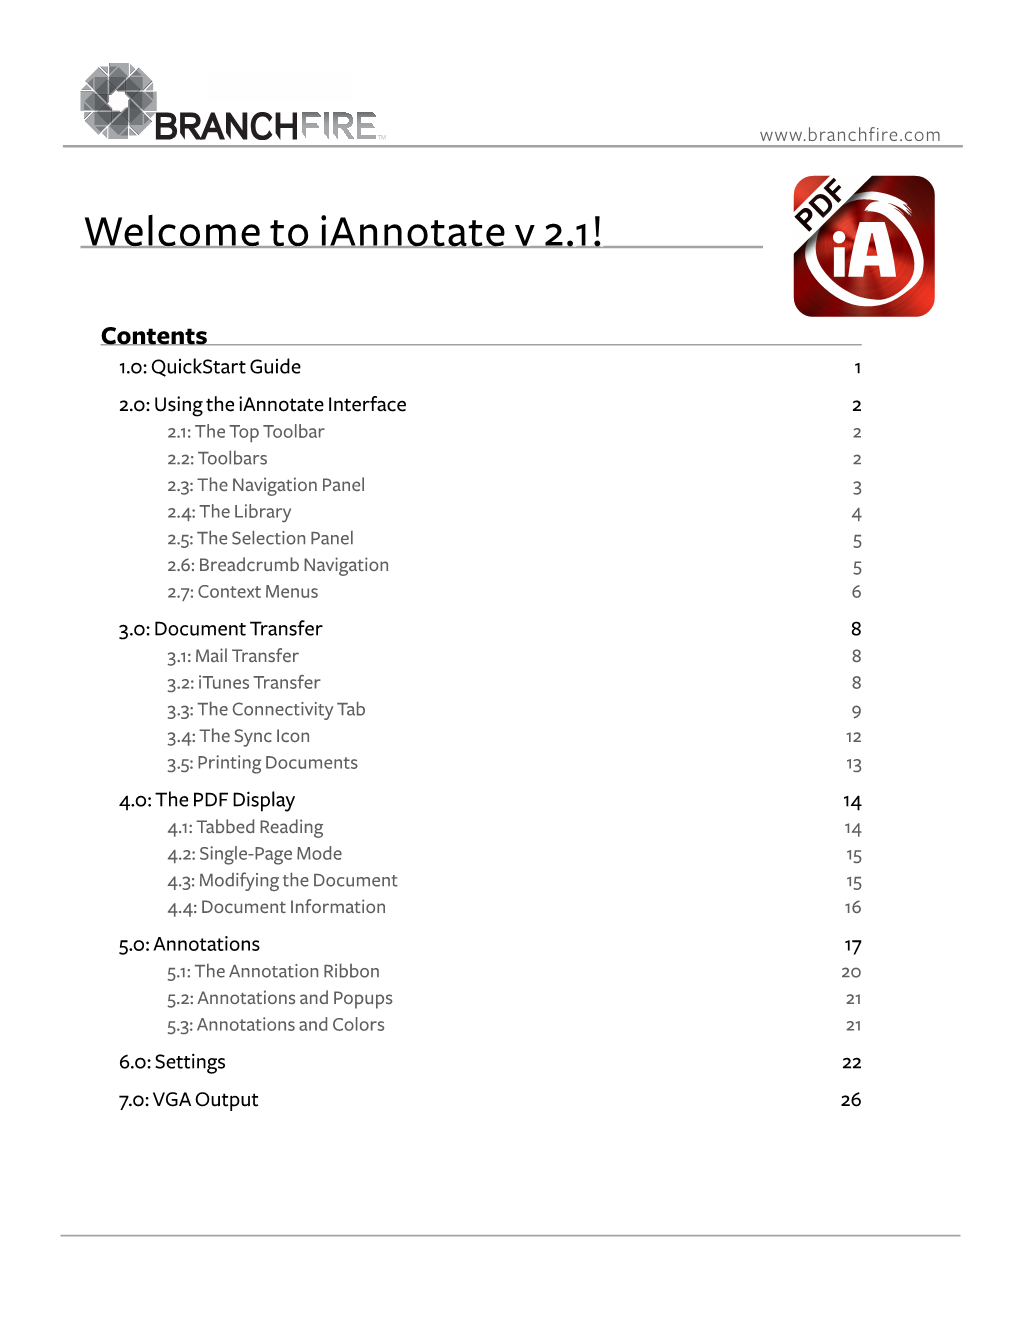 Iannotate V 2.1!